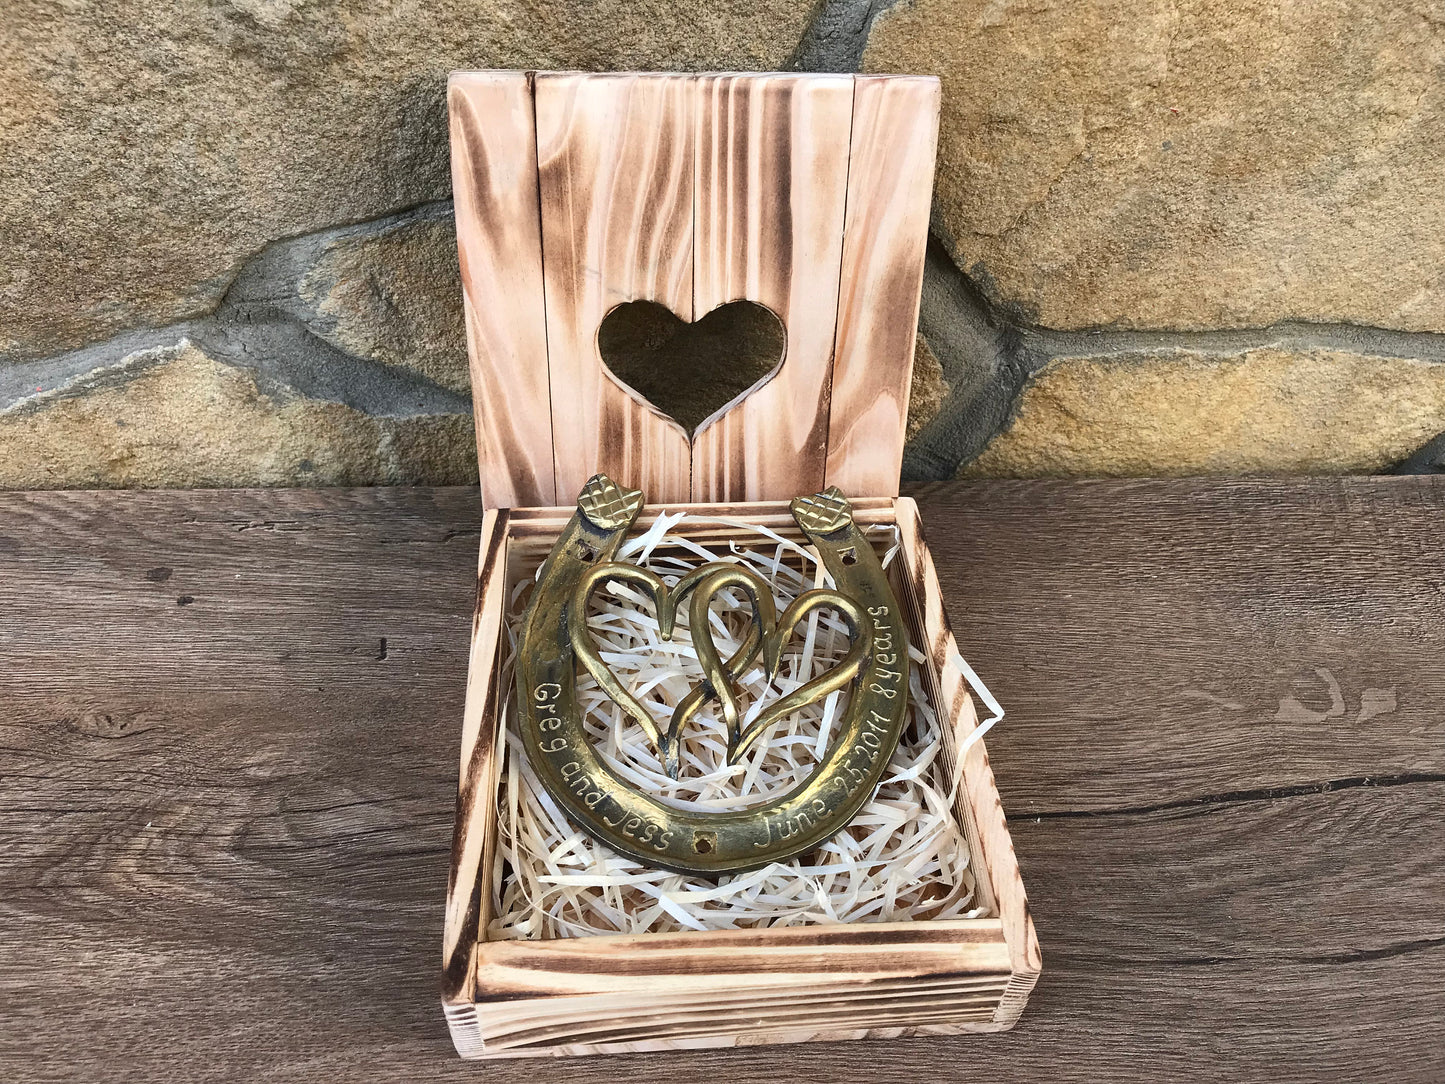 Engraved bronze gift, bronze gifts, 8 year gifts, 8th anniversary gift, bronze horseshoe, horse shoe, bronze gift idea,bronze hearts